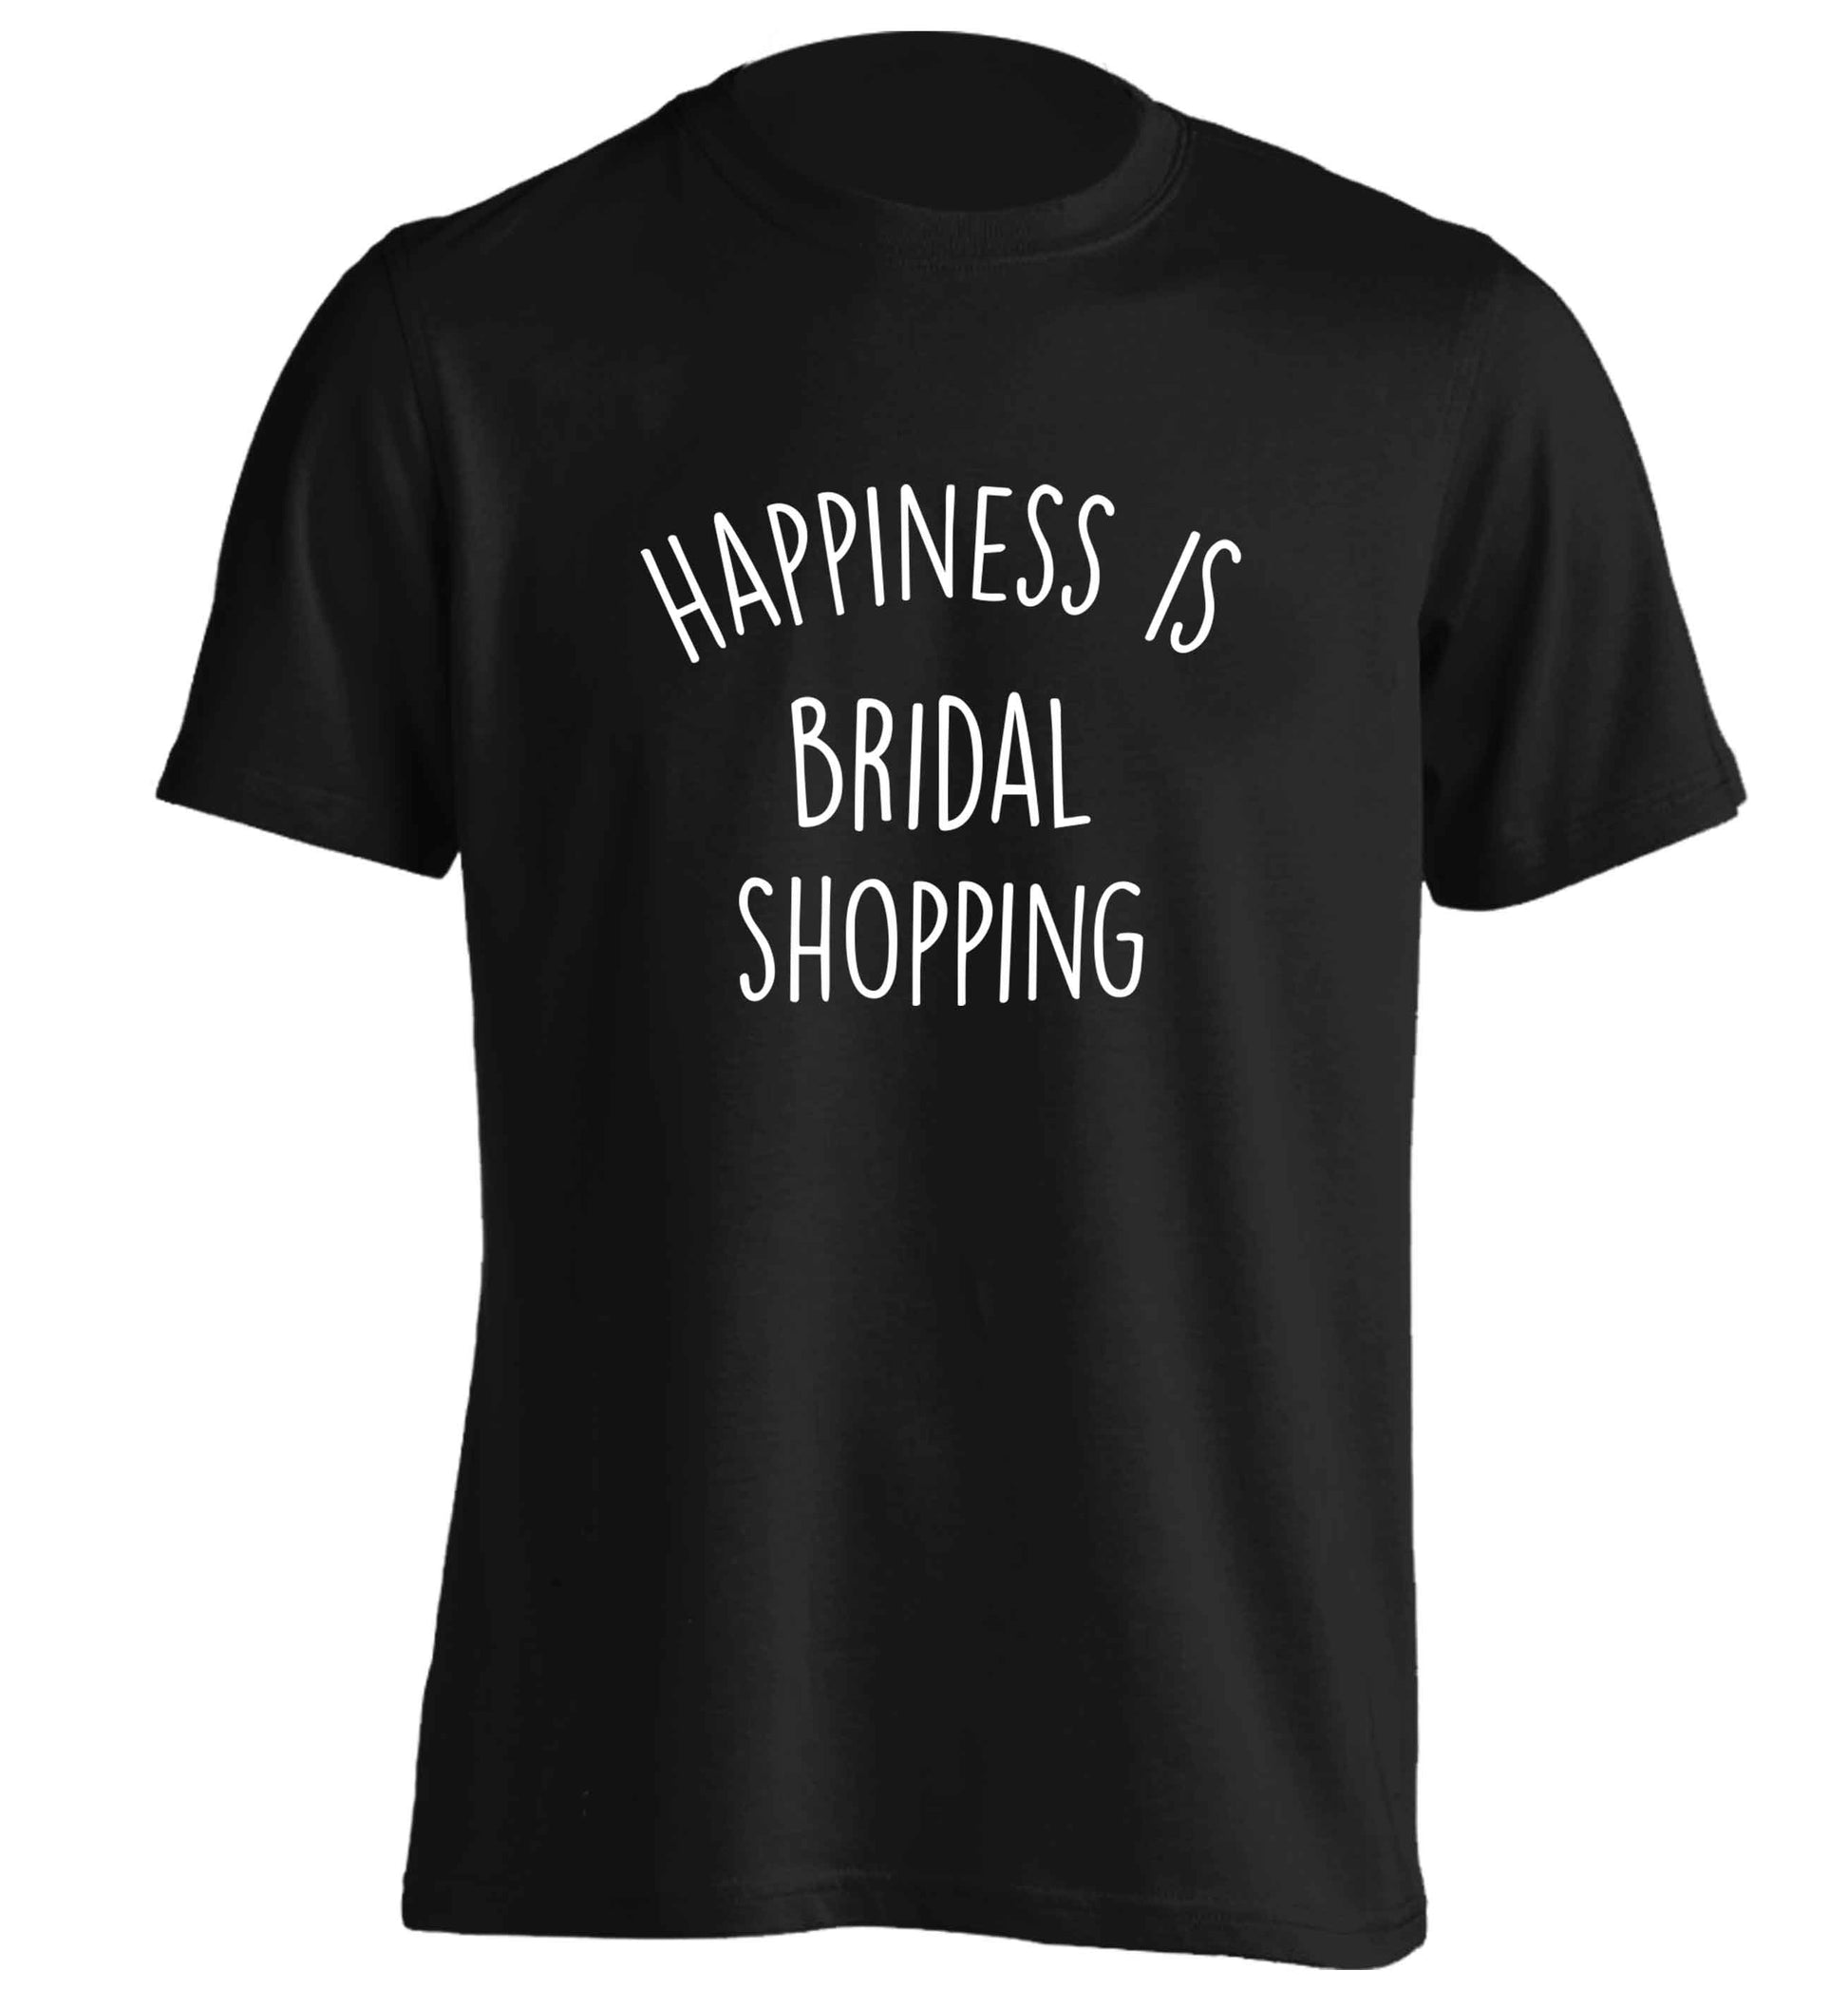 Happiness is bridal shopping adults unisex black Tshirt 2XL